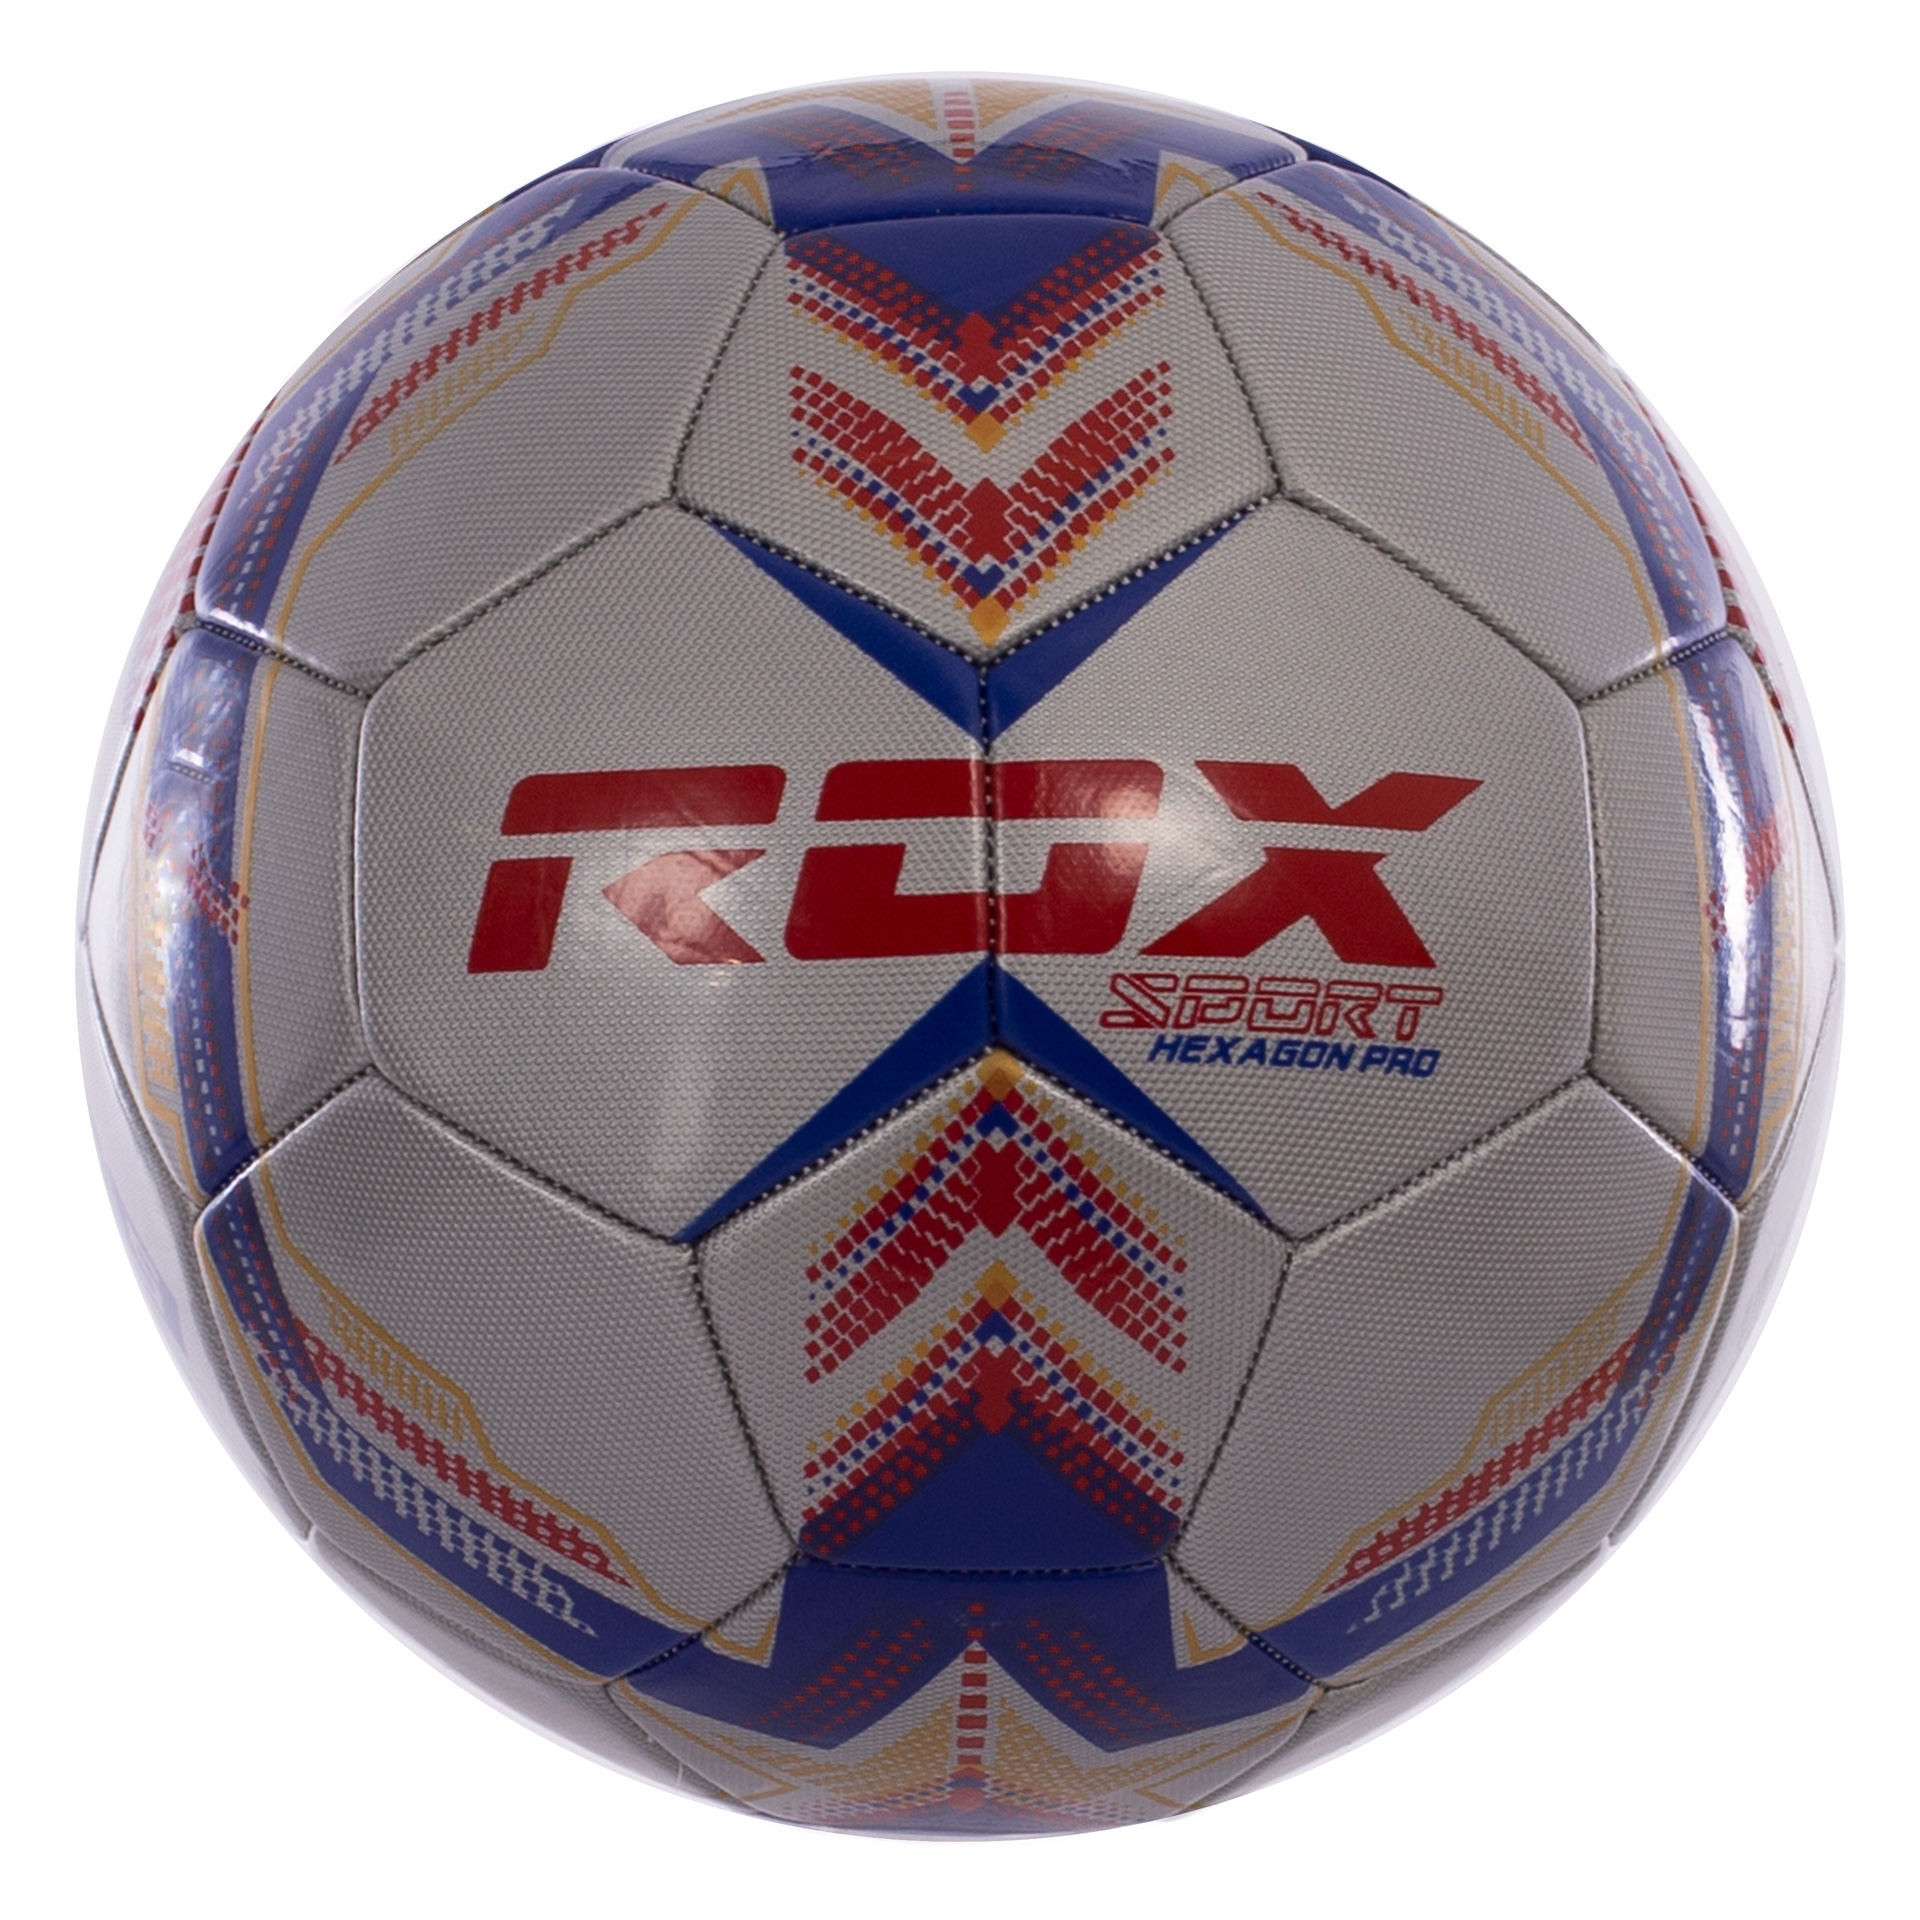 balon rox futbol hexagon pro